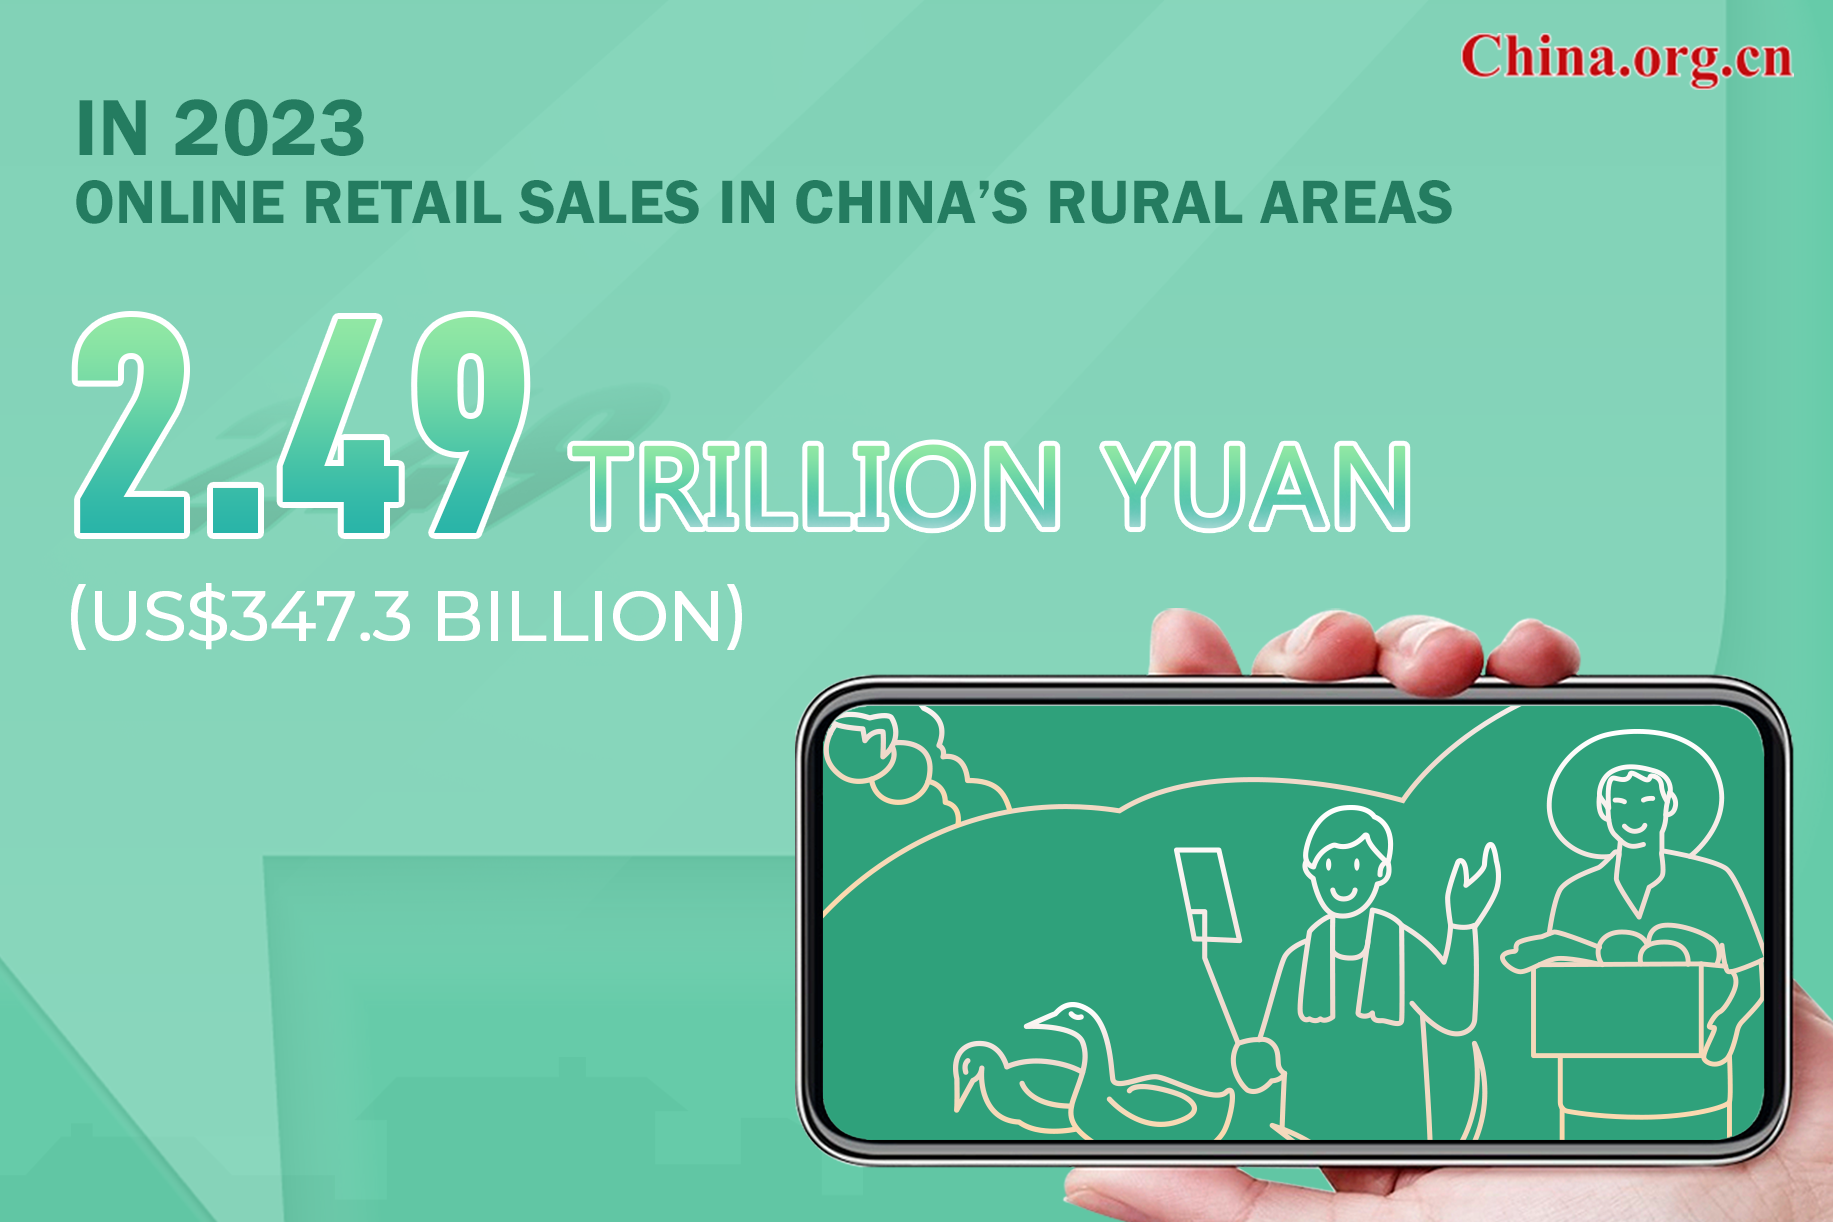 农业农村部：2023年农村网络零售额达到2.49万亿元 Rural online retail sales hit 2.49 trillion yuan in 2023